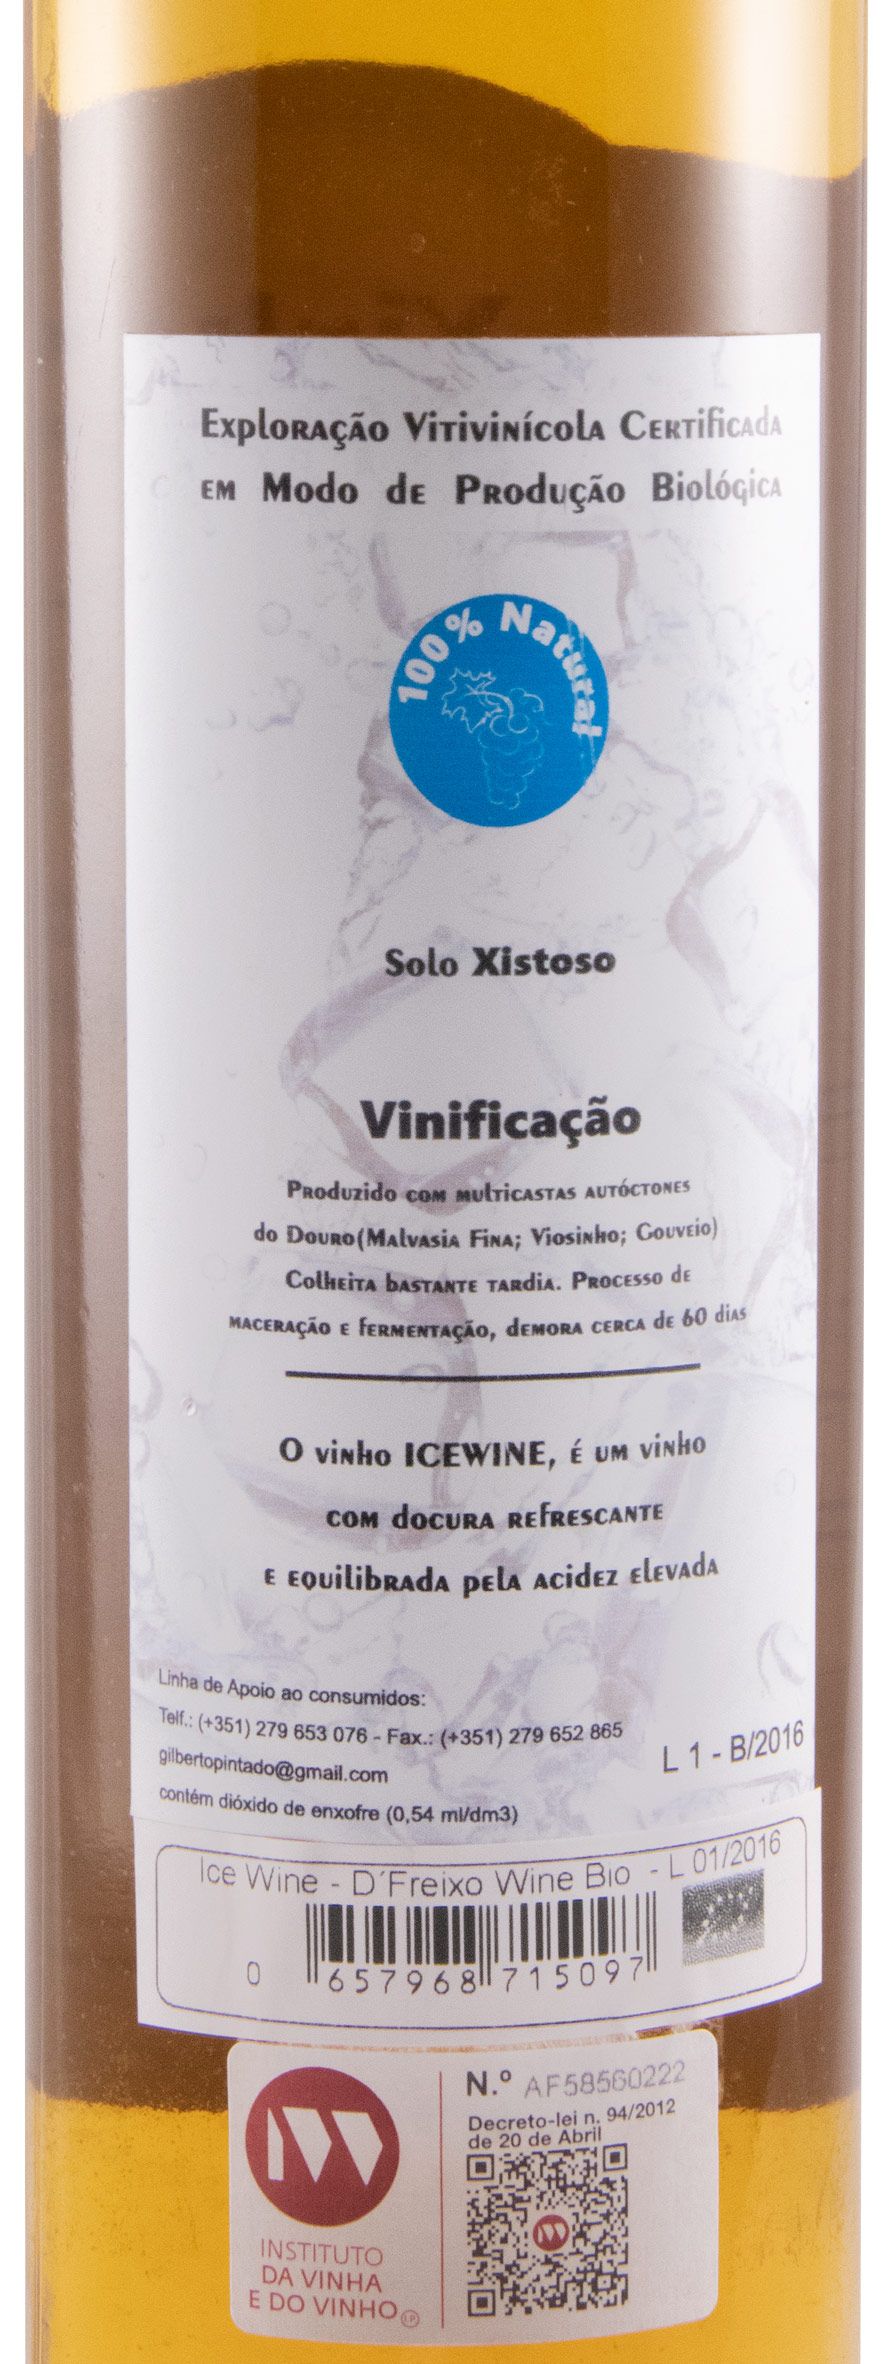 D'Freixo Wine Ice Wine Elite biológico branco 50cl